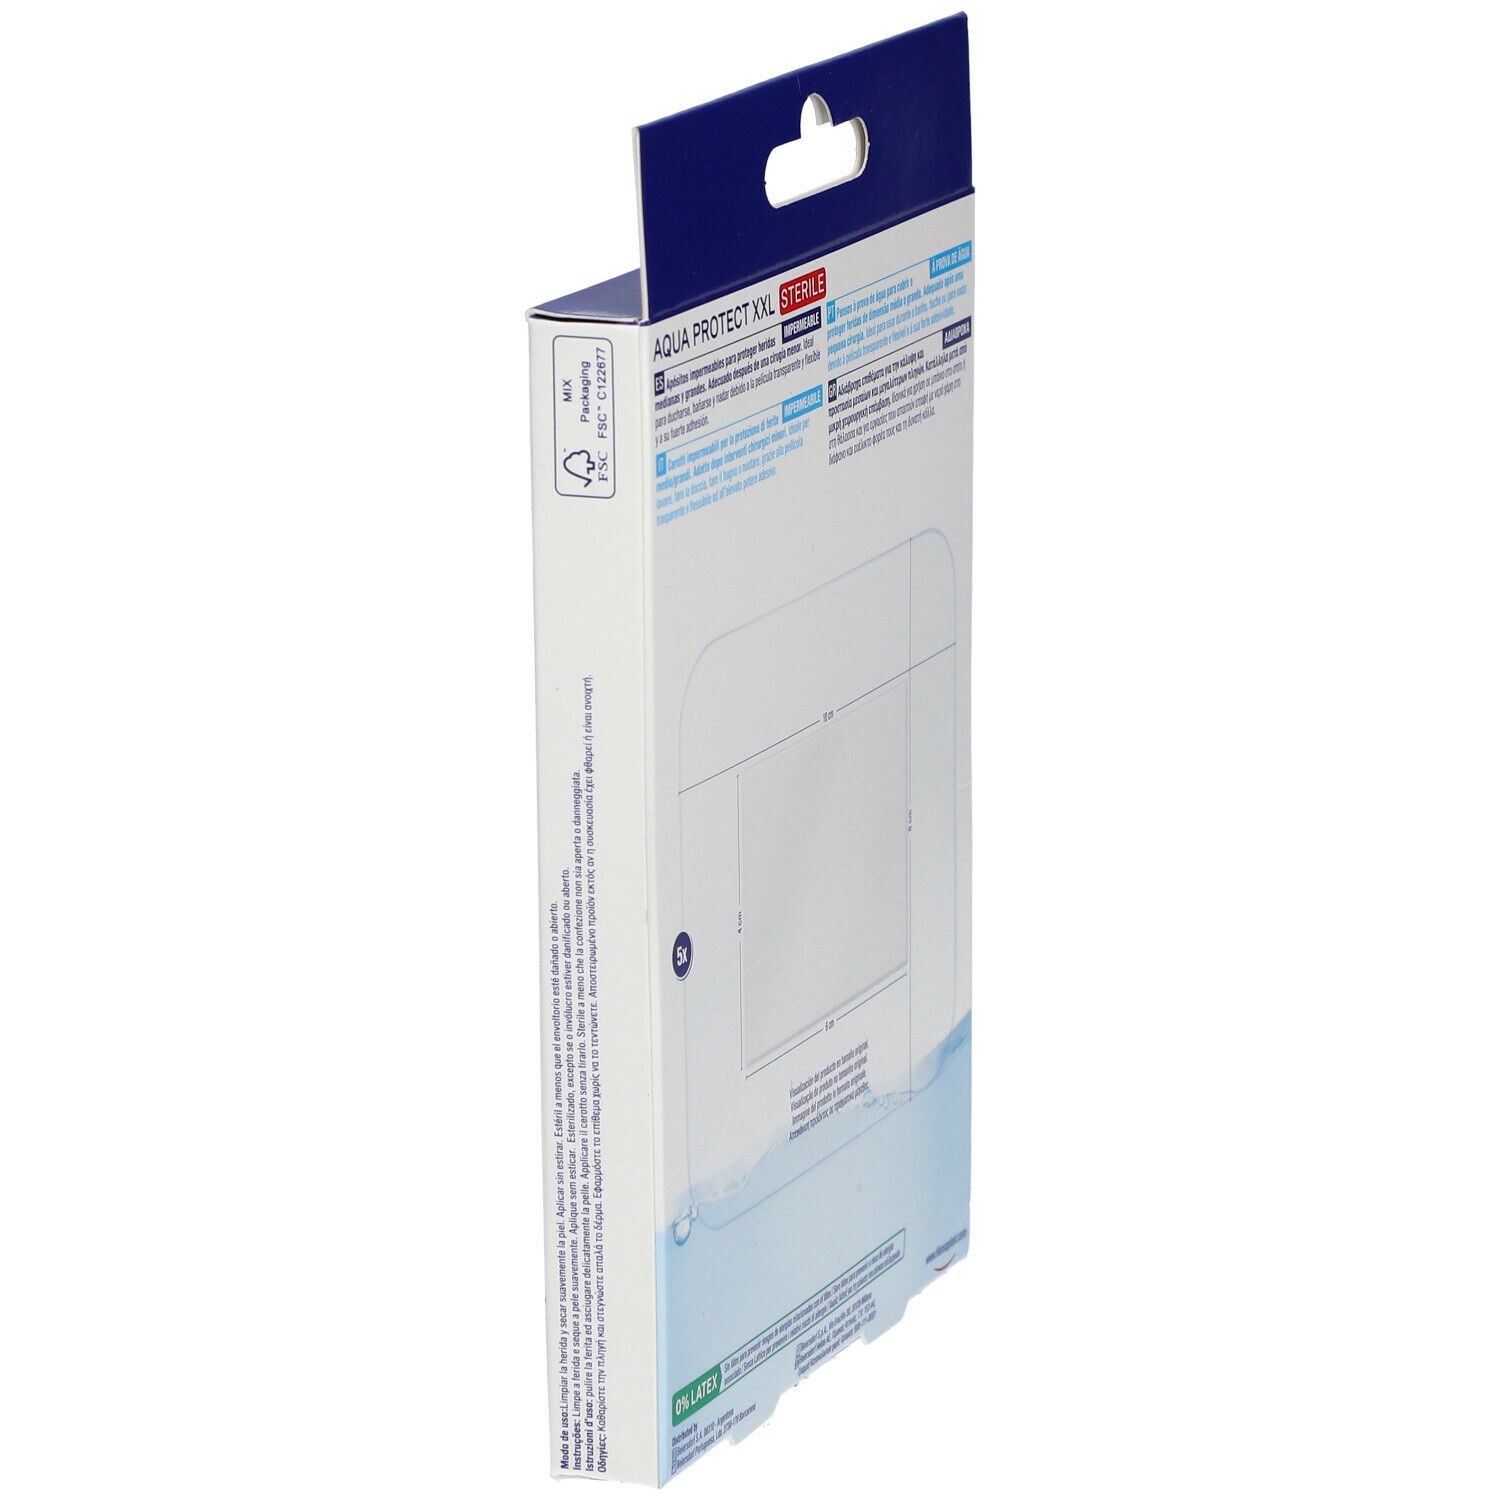 Hansaplast  Aqua Protect XXL (8 x 10cm)